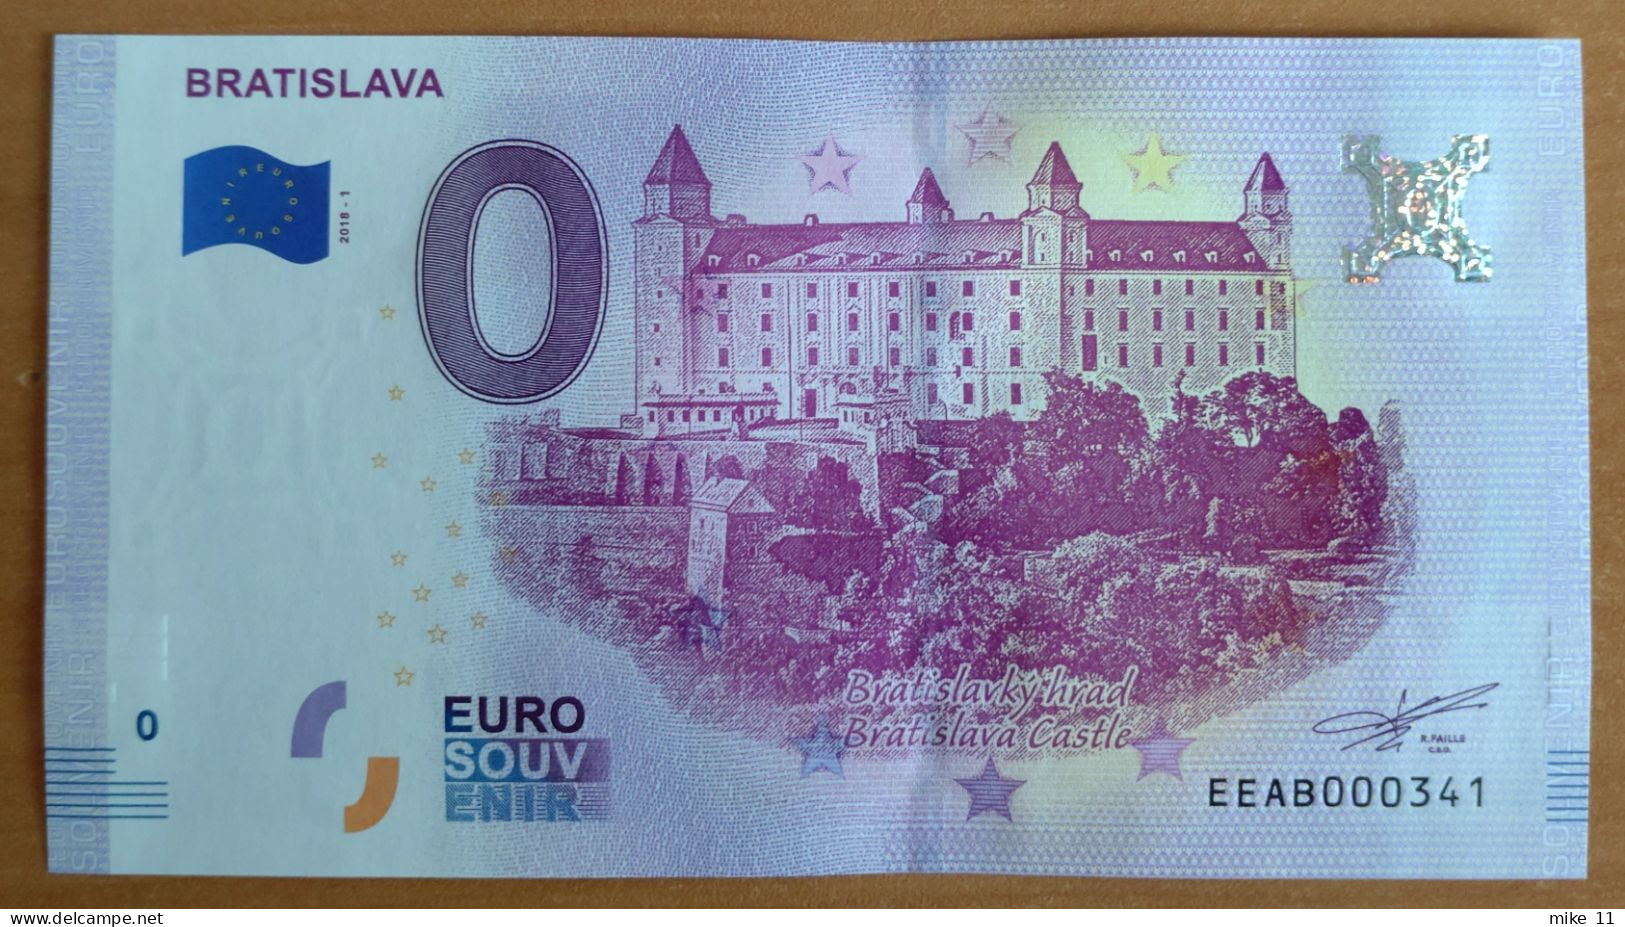 0 Euro Souvenir BRATISLAVA Slovakia EEAB 2018-1 Nr. 341 - Andere - Europa